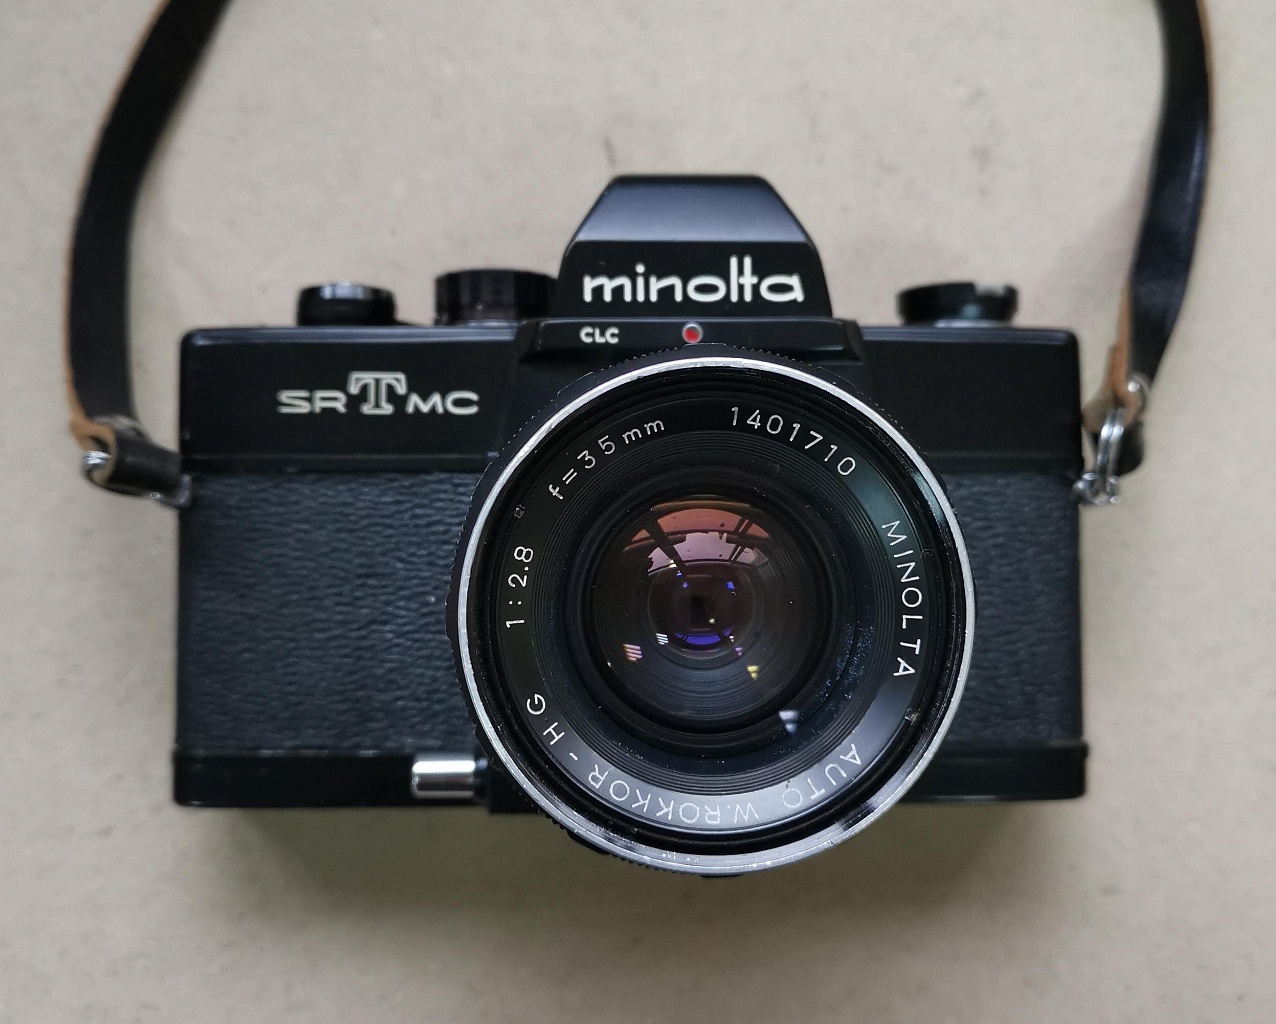 Minolta SRT mc + Minolta auto w. rokkor-hg 35 mm f/2.8 фото №1